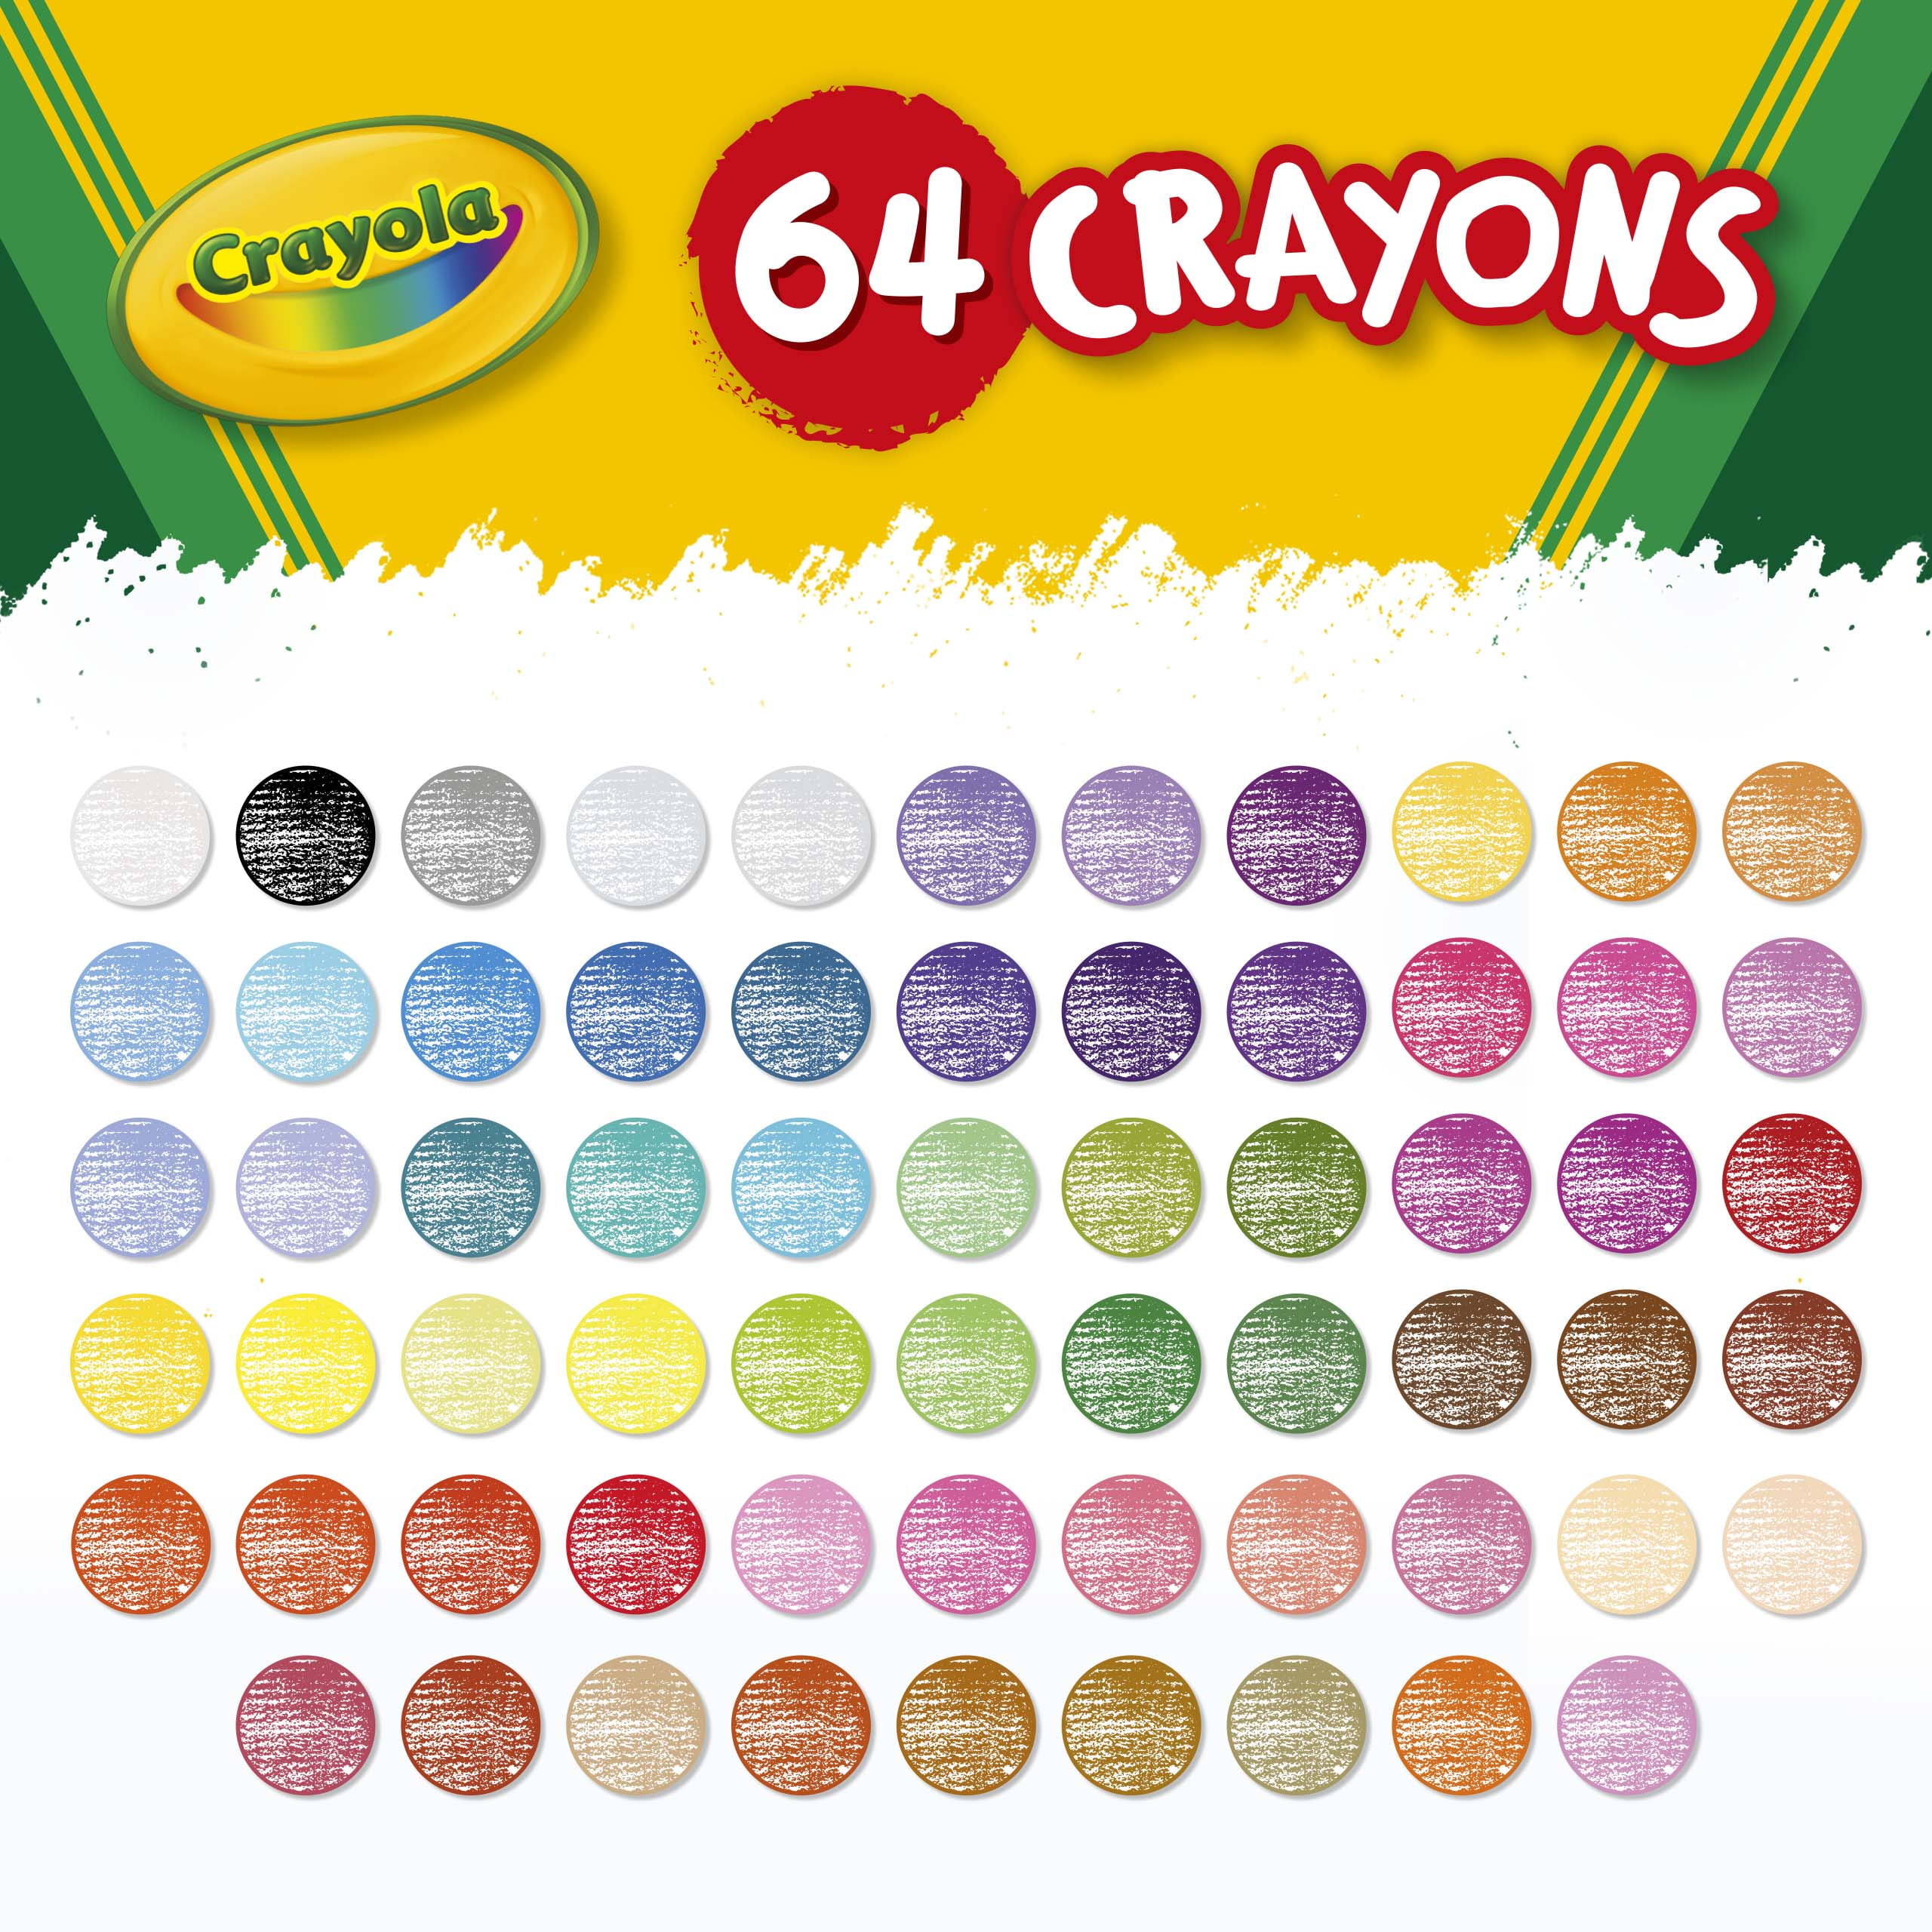 Crayon Holder - ColorBlast 64 crayon heads up display, Kids Desk